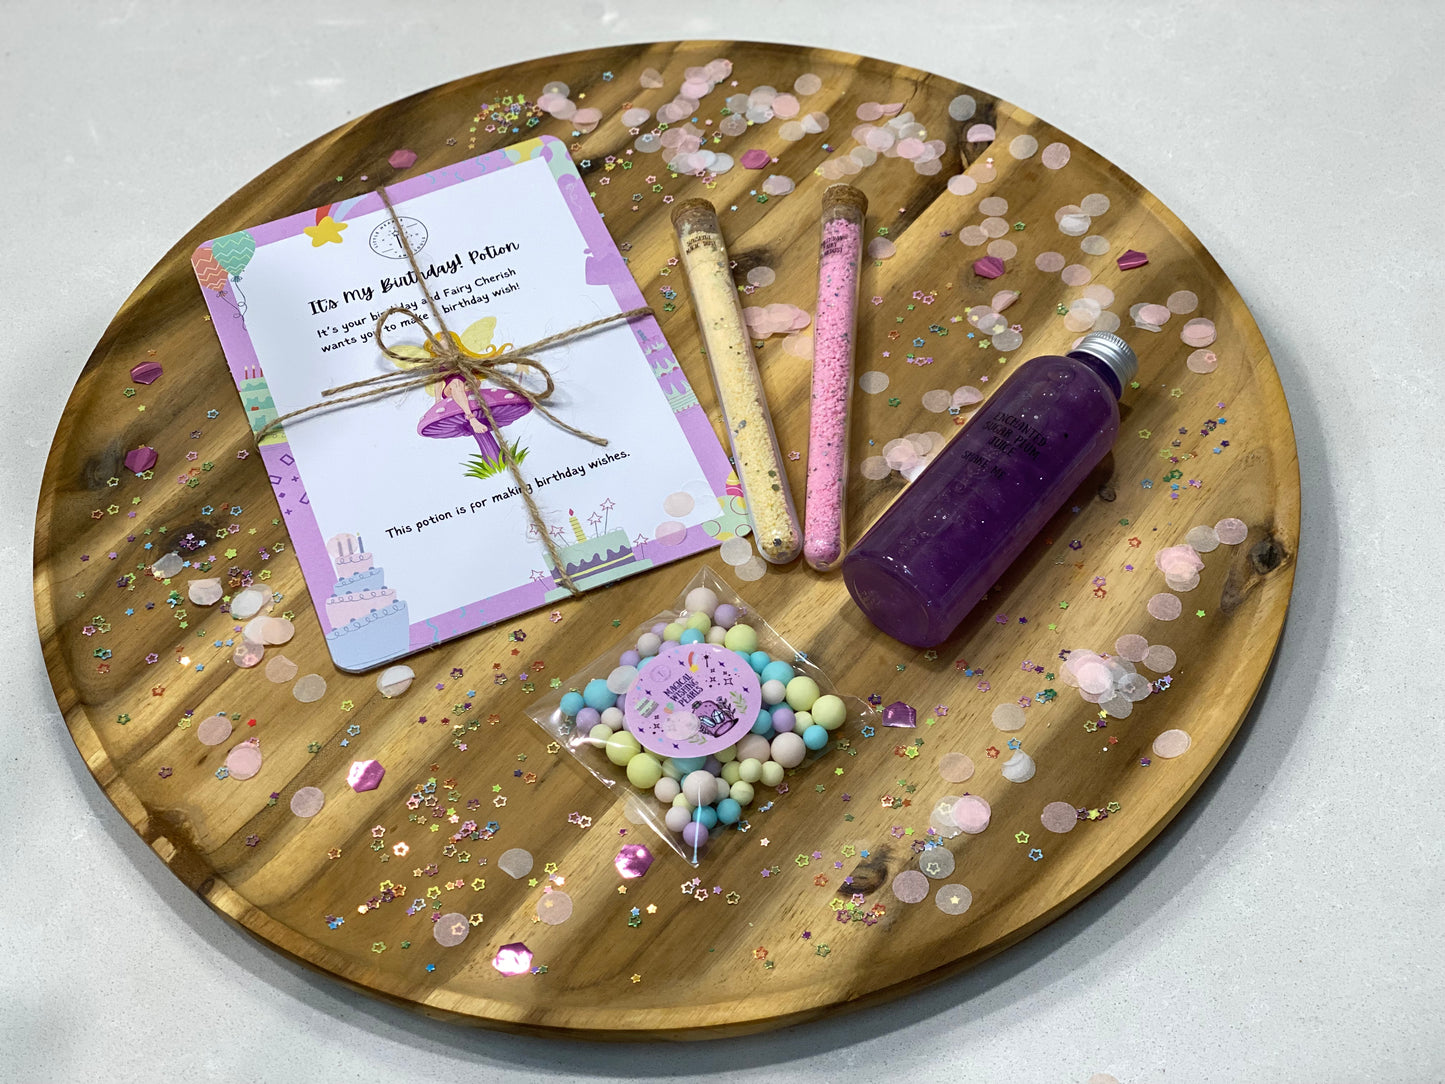 It’s My Birthday! Fairy Potion Kit